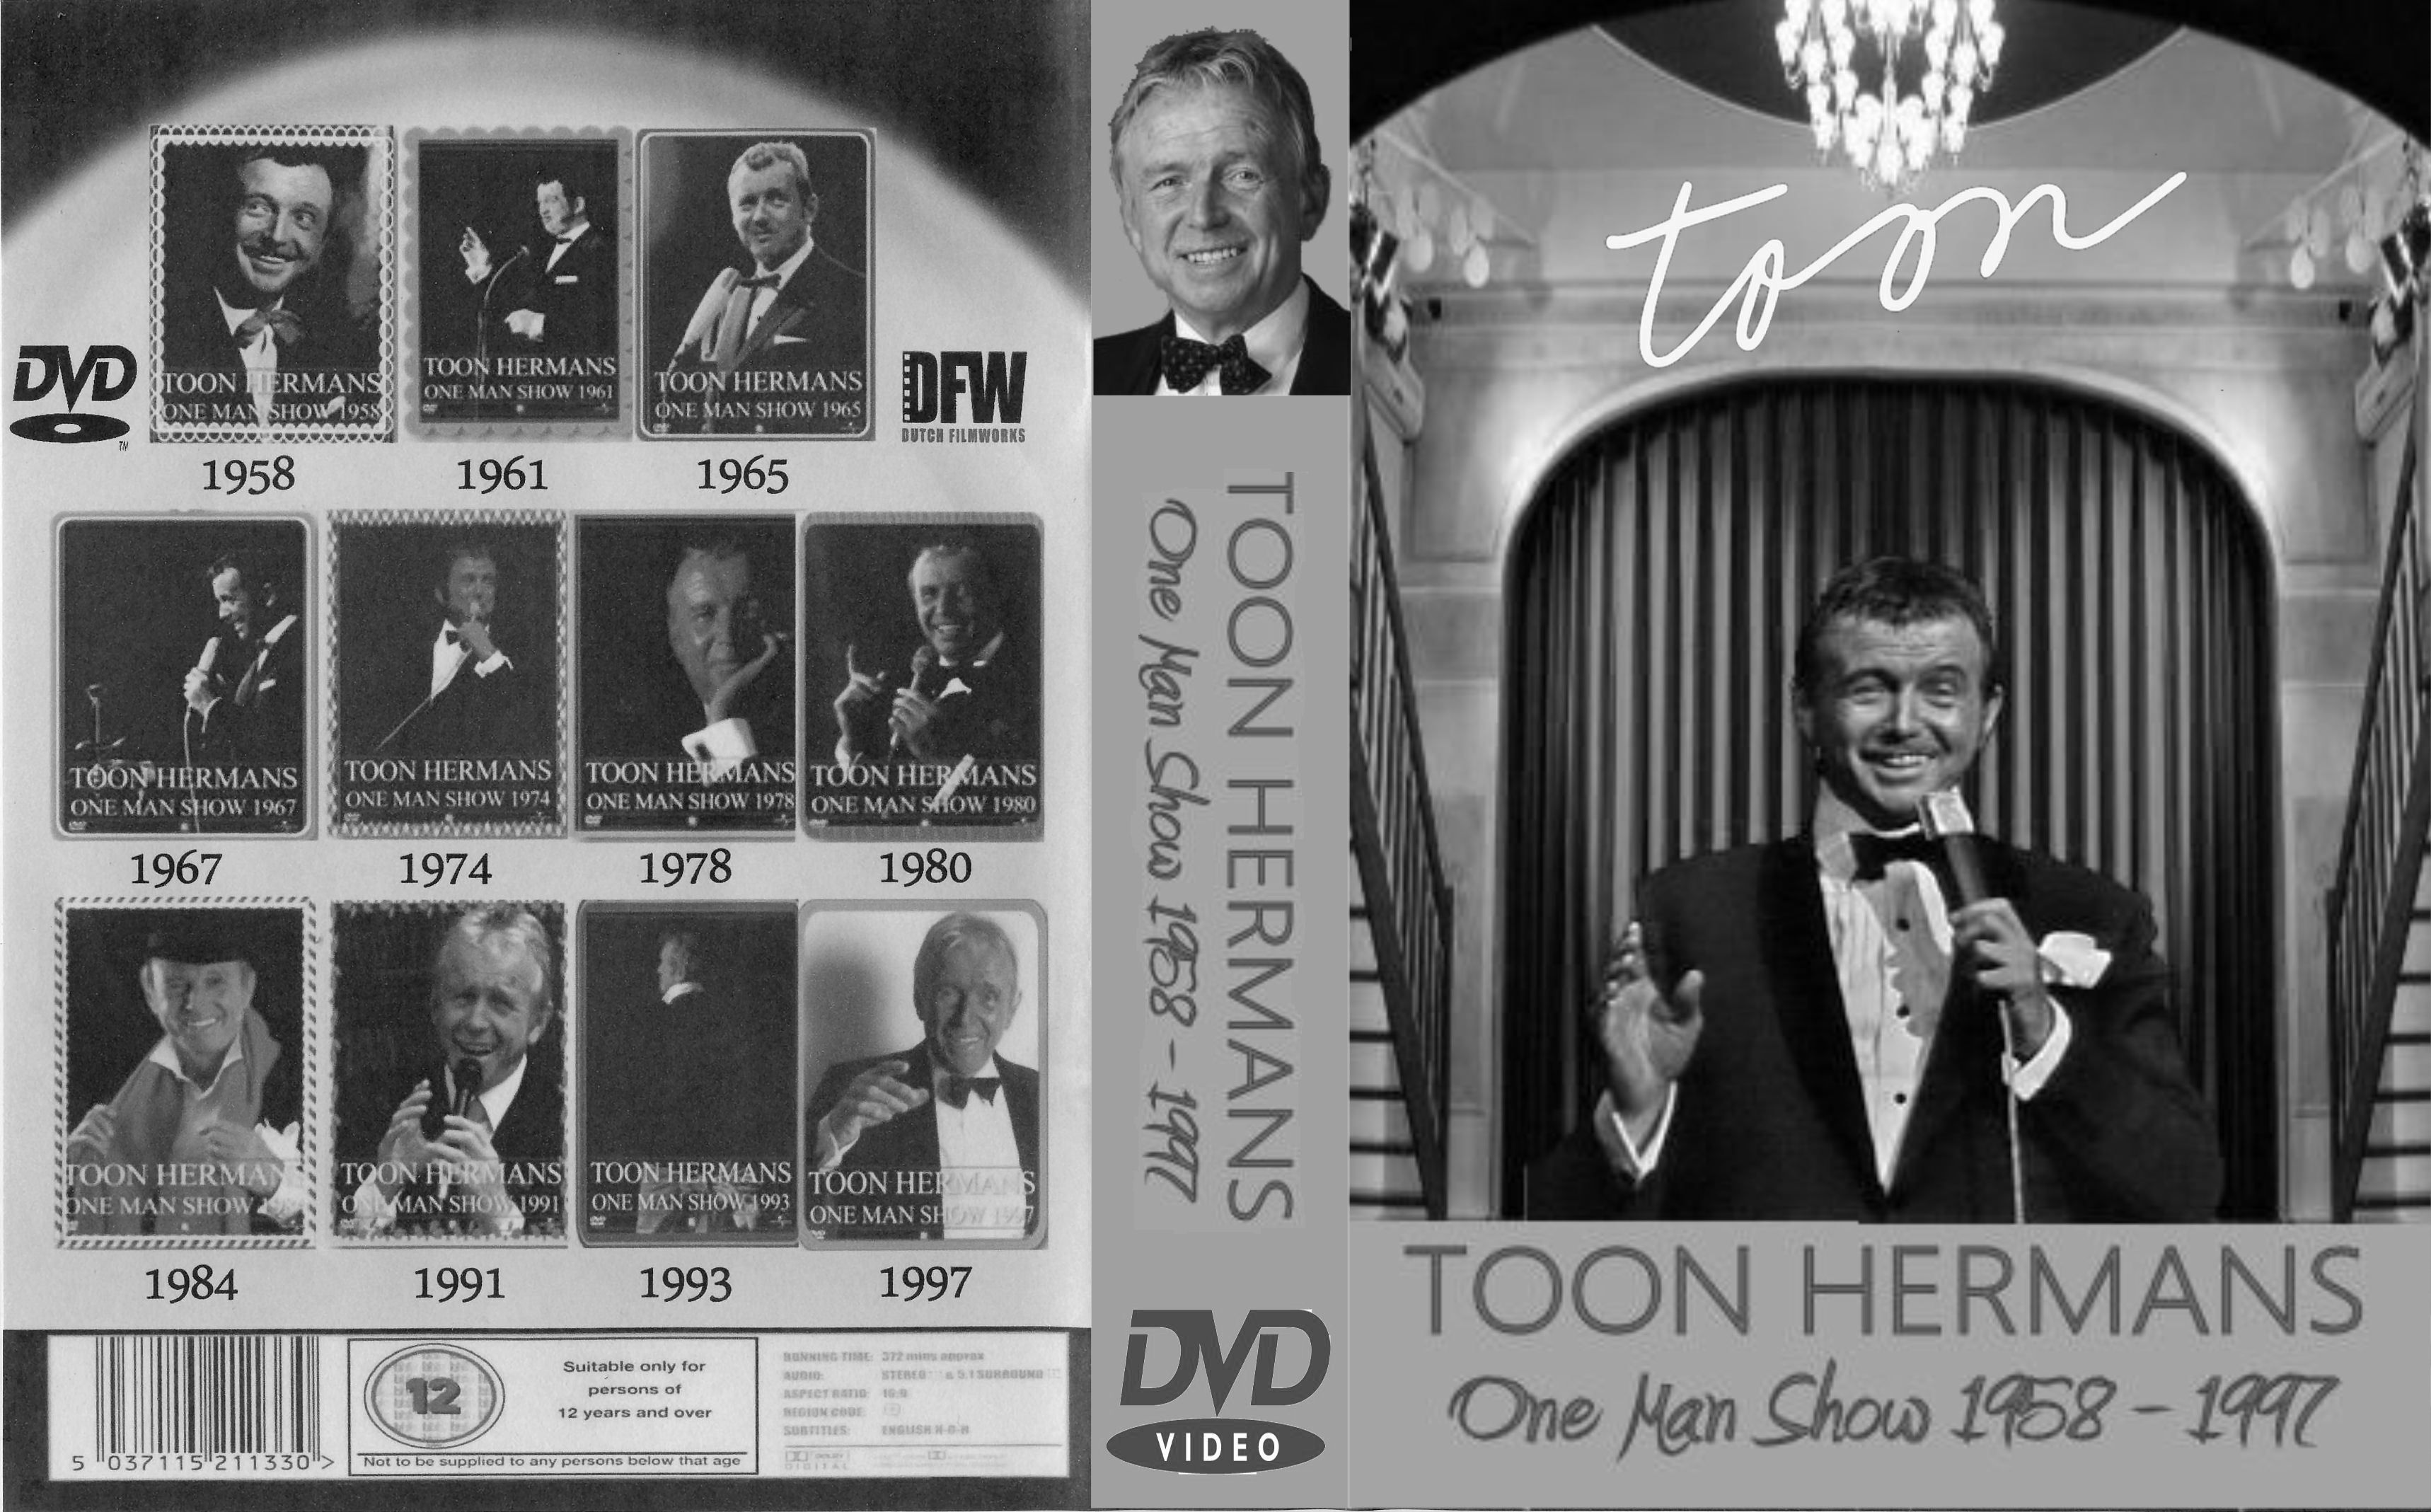 Toon Hermans One Man Show 1958 - 1997 - DvD 4 (1967)